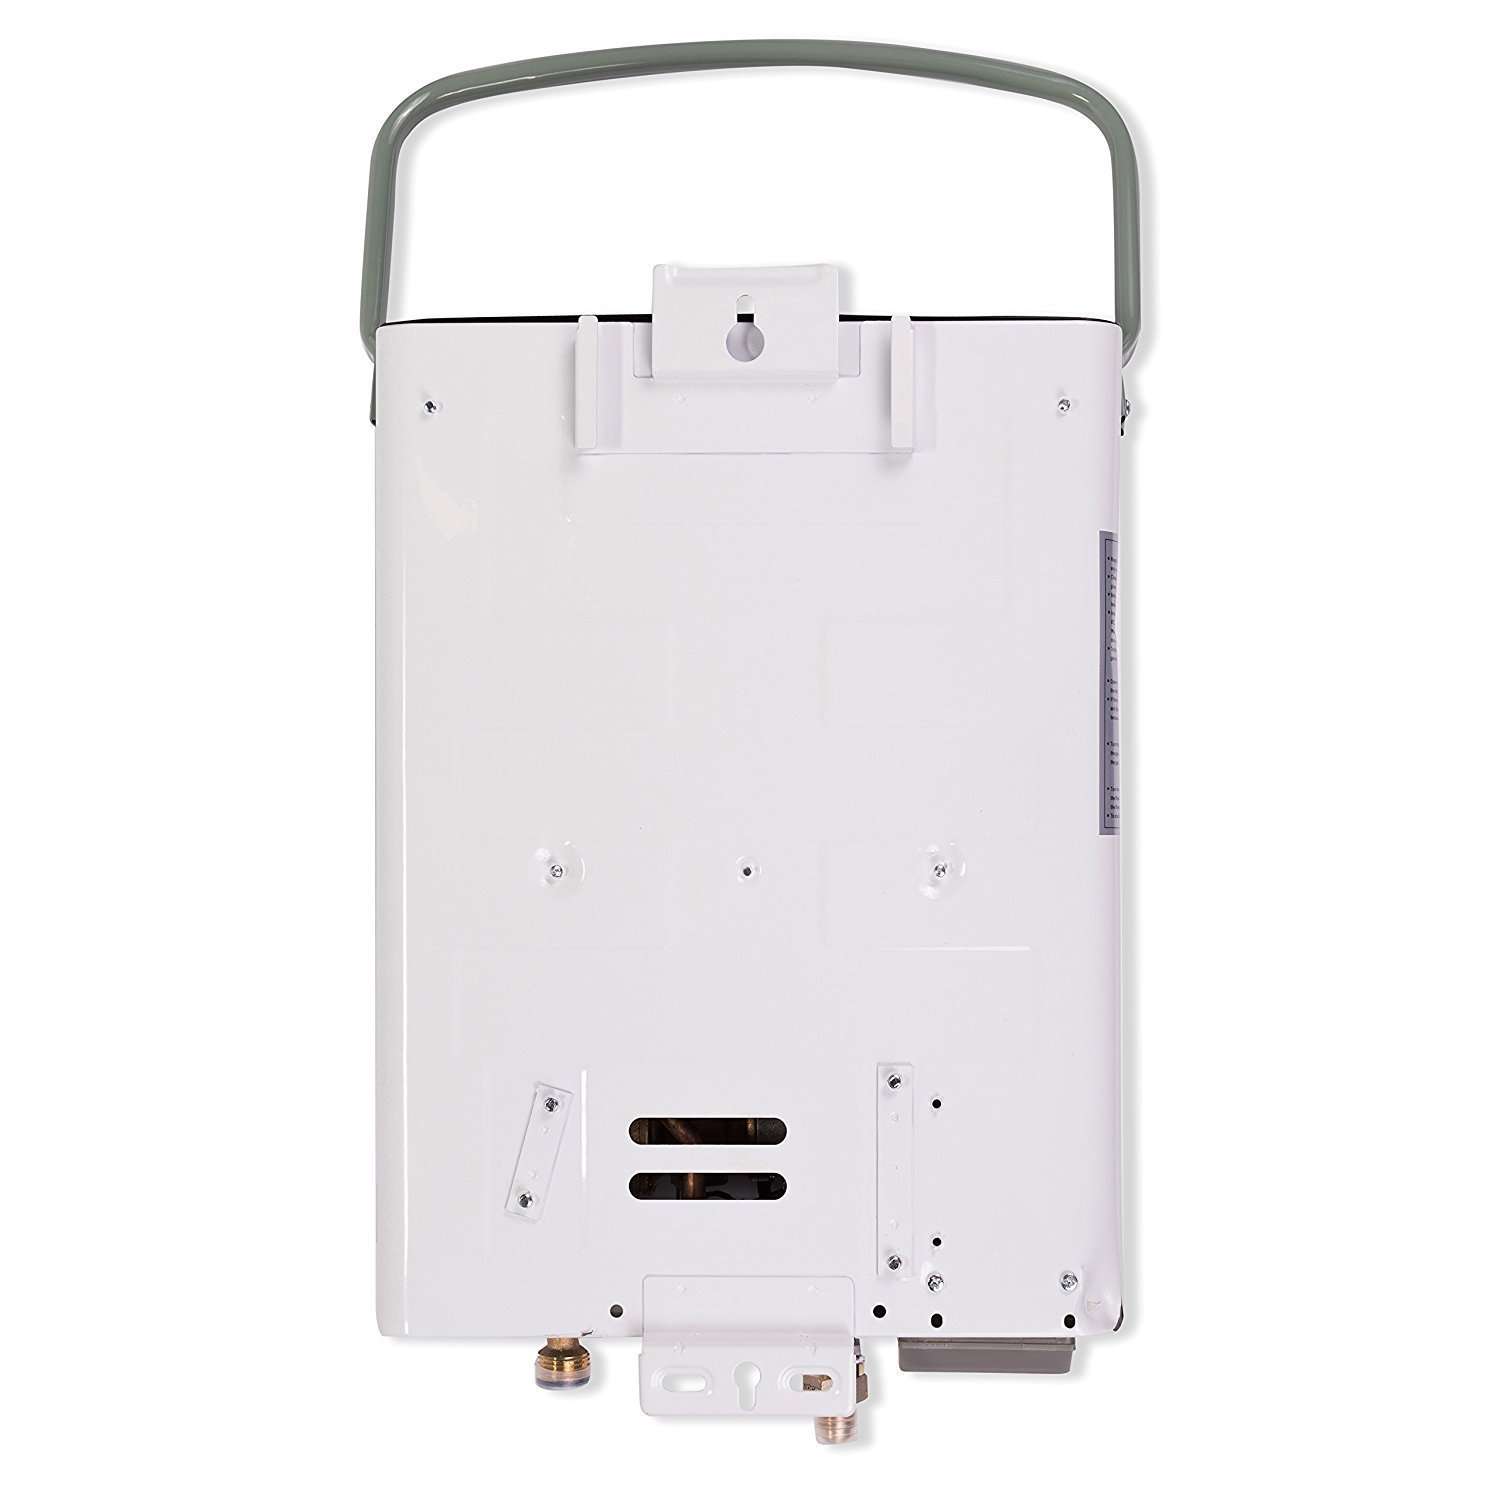 Eccotemp L5 1.5 GPM Propane Tankless Water Heater w/ Flojet Pump Manufacturer RFB